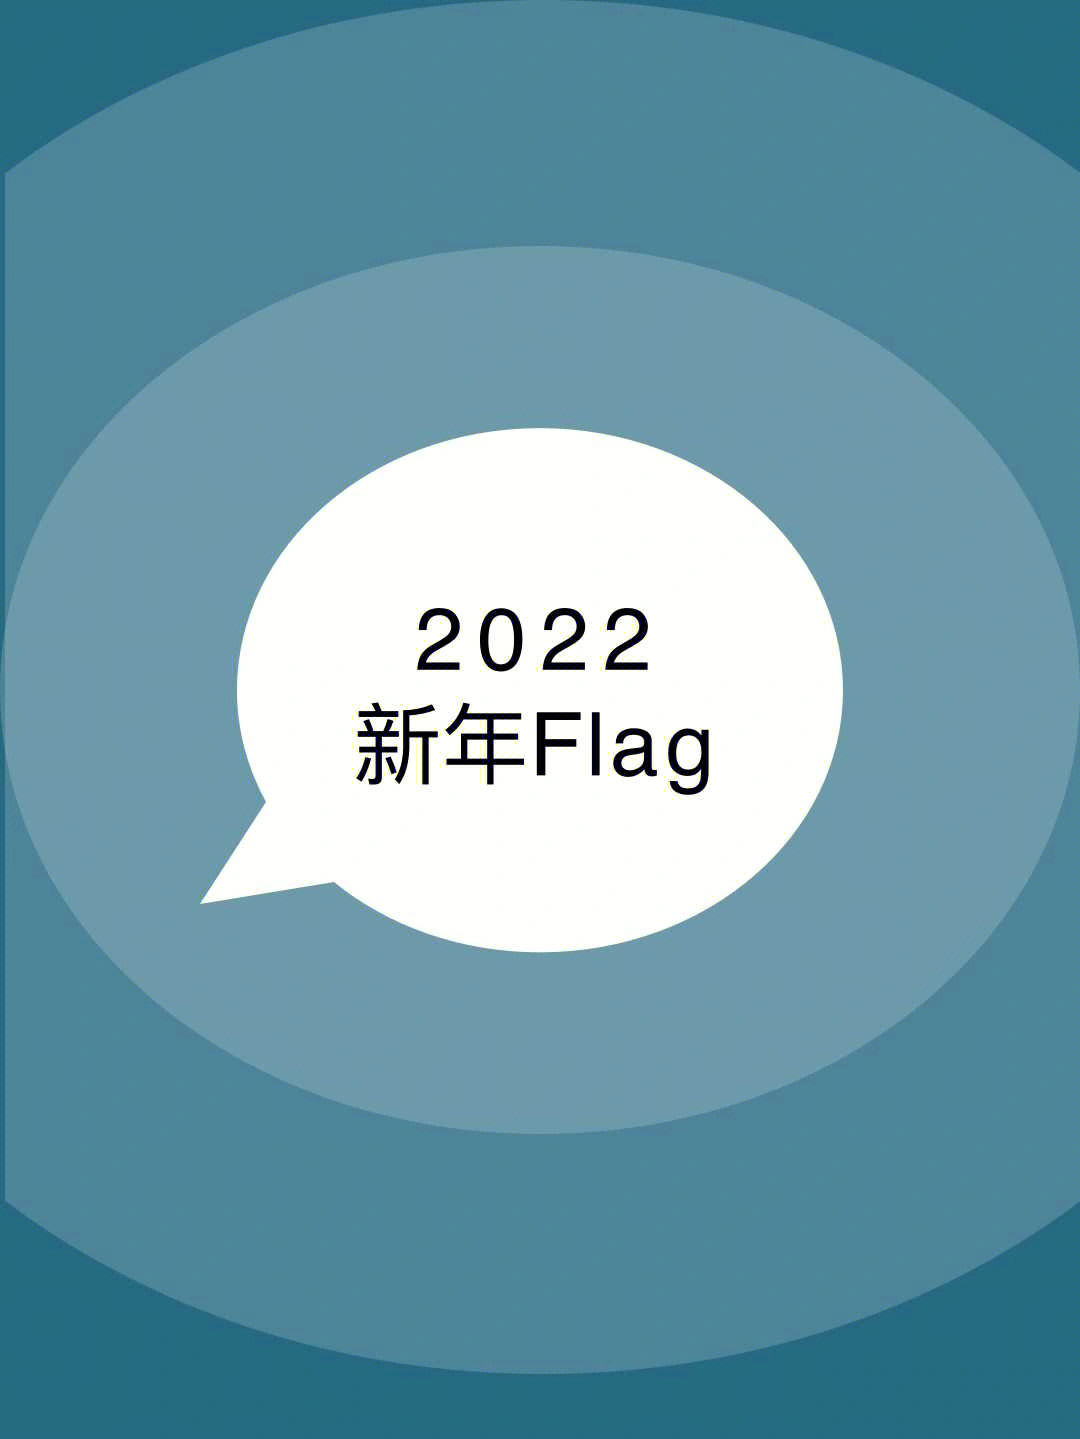 2022年新年flag